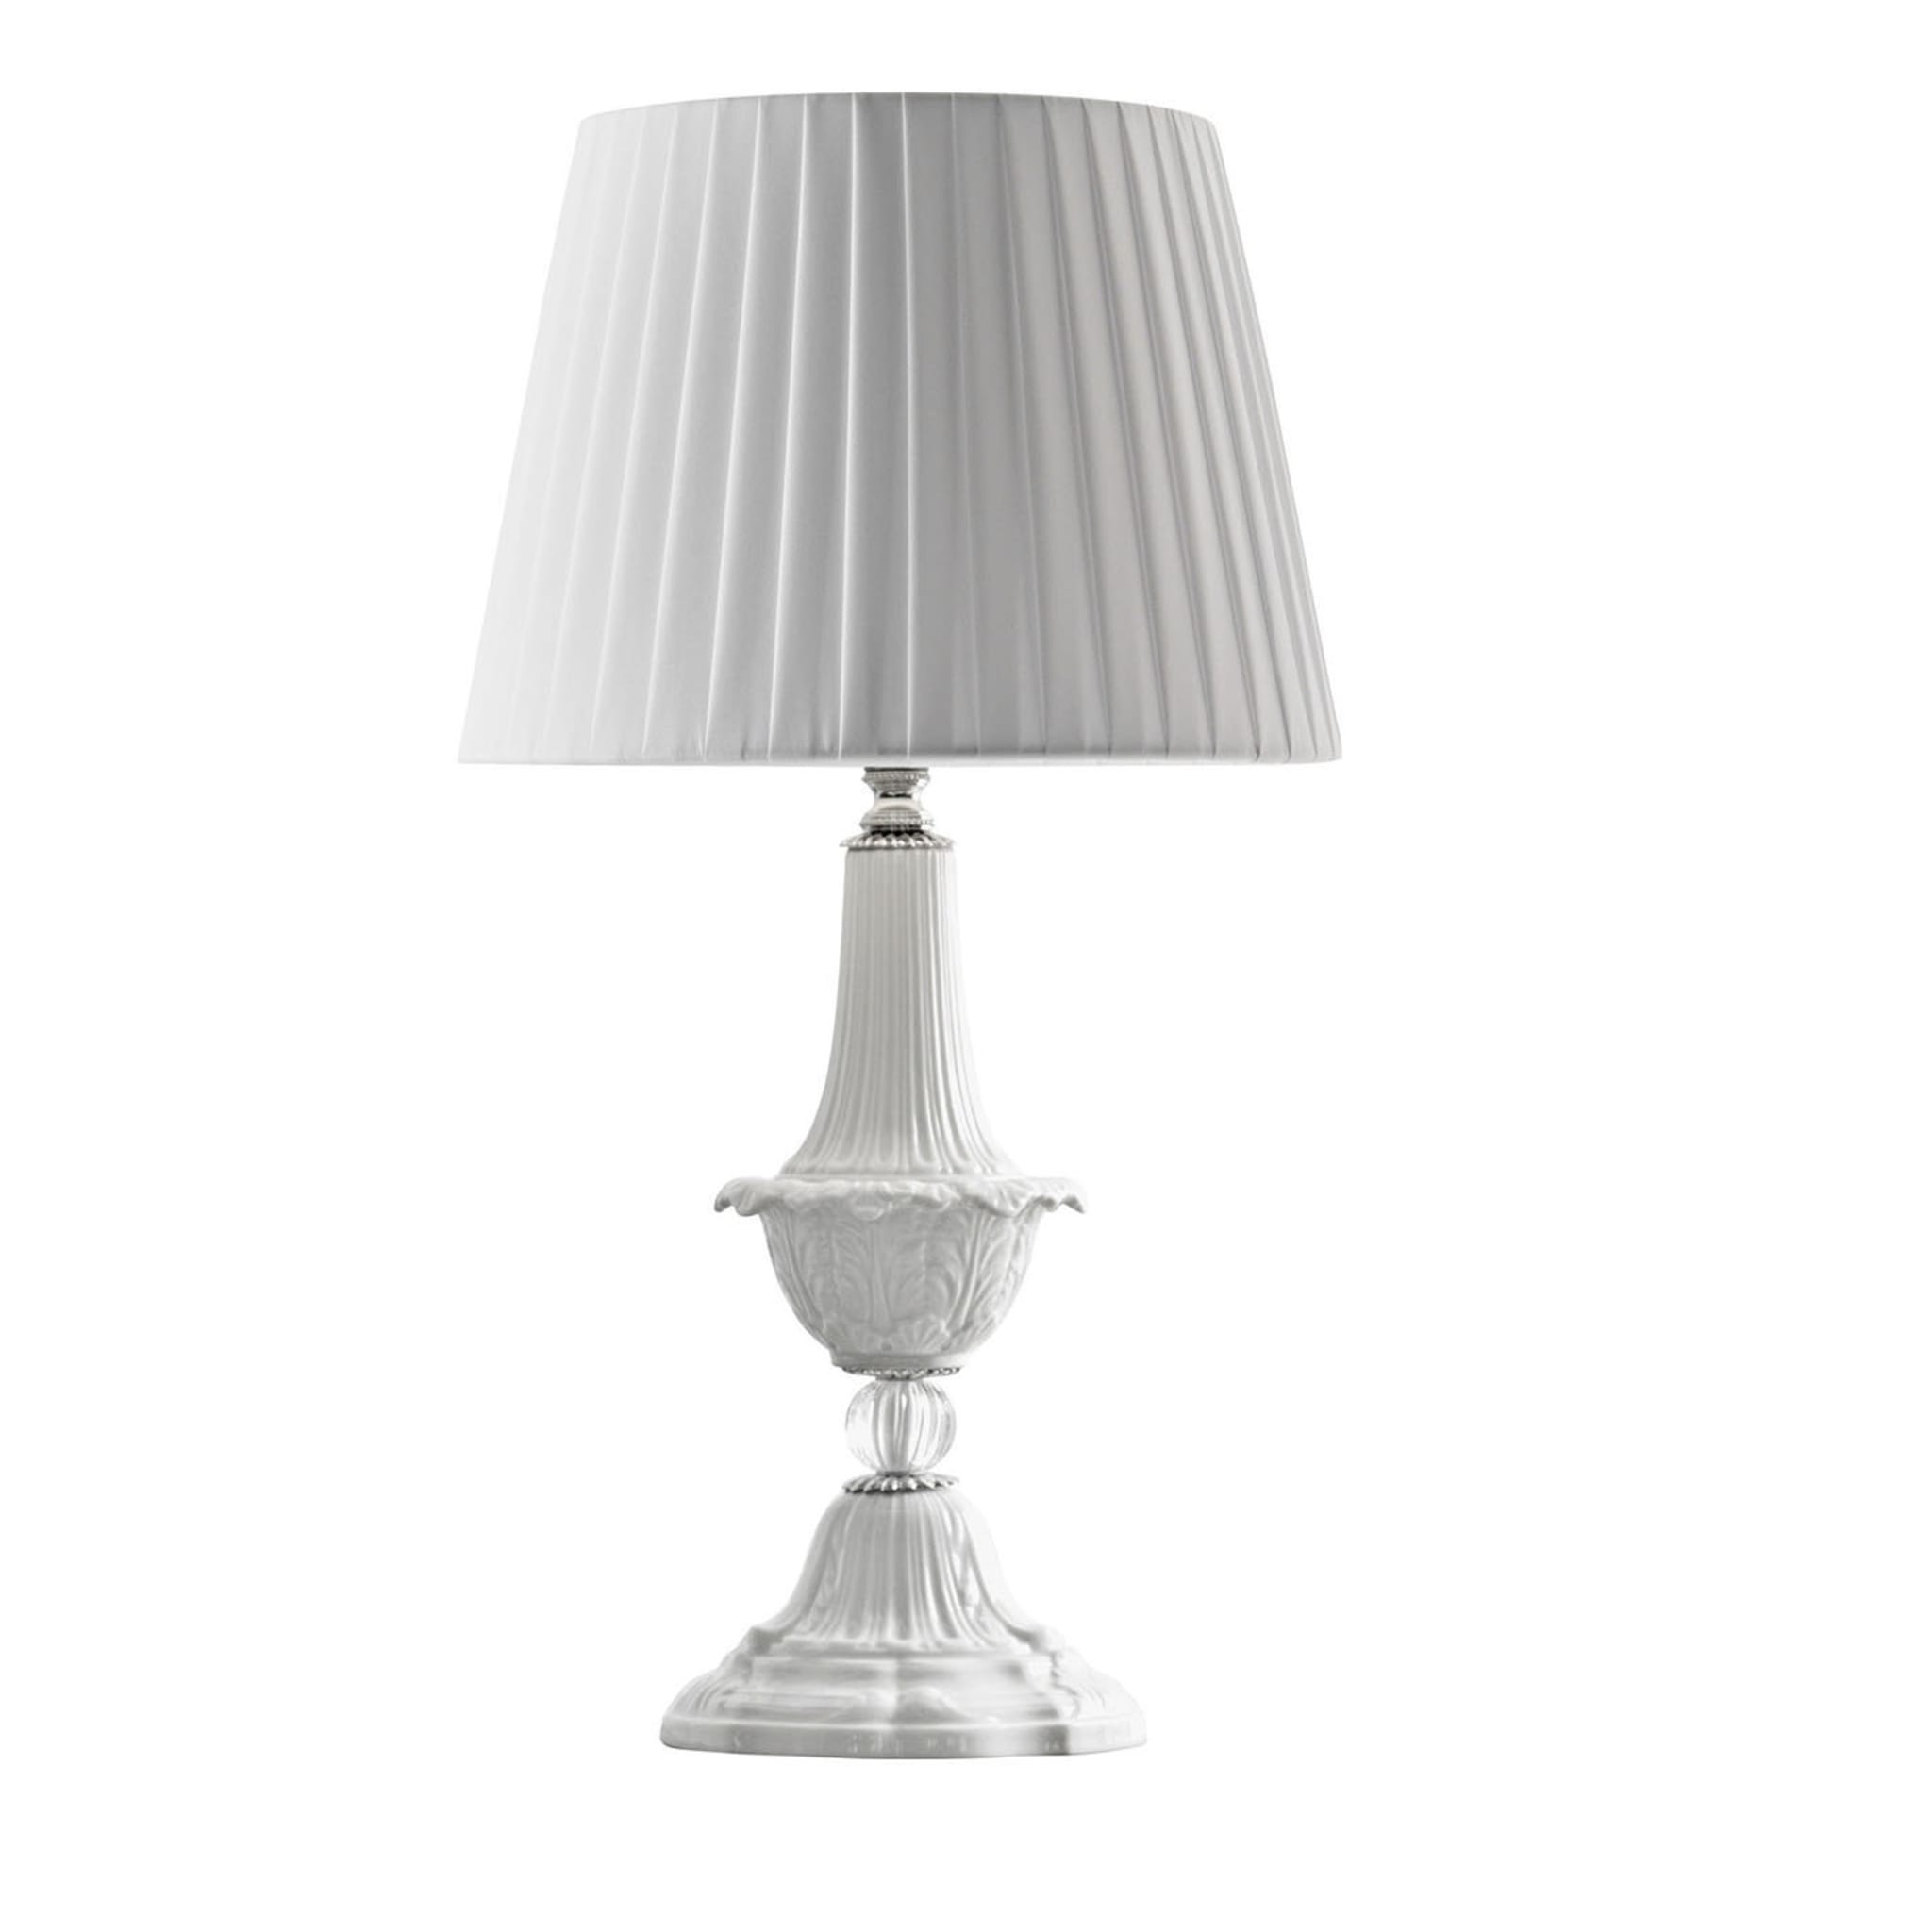 Capodimonte Table Lamp #1 - Main view